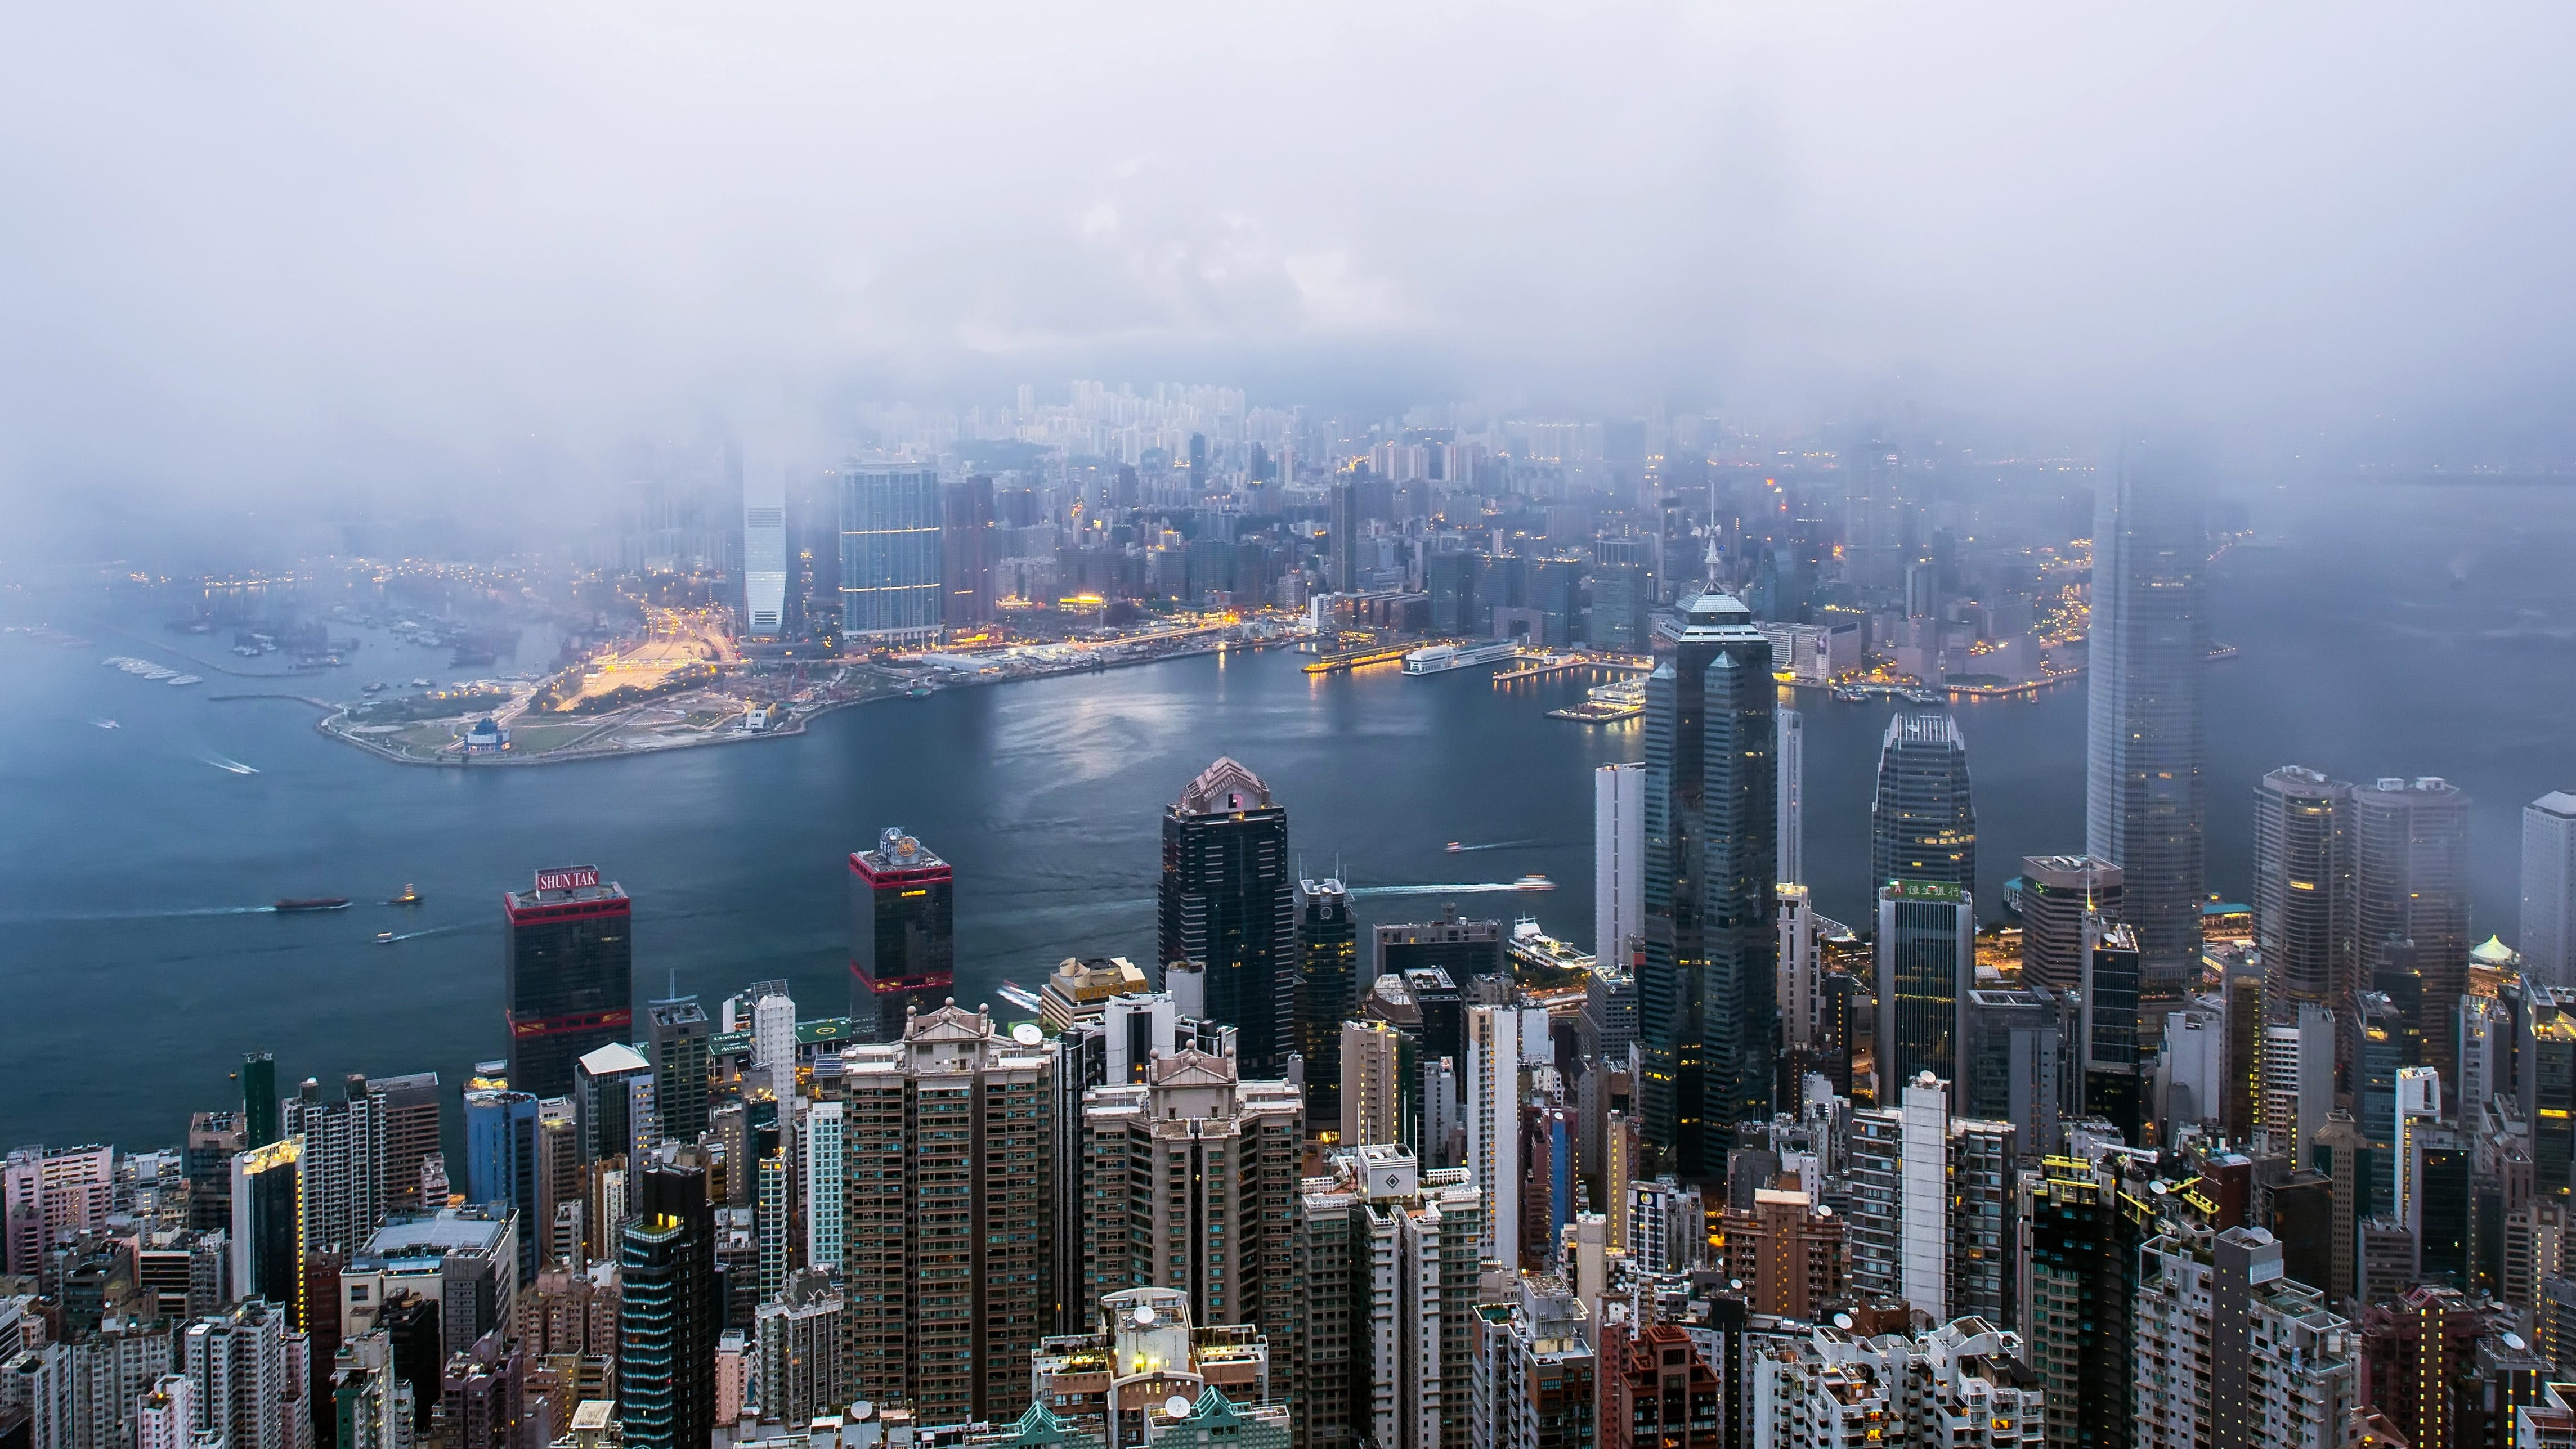 high-rise building, cityscape, mist, Hong Kong